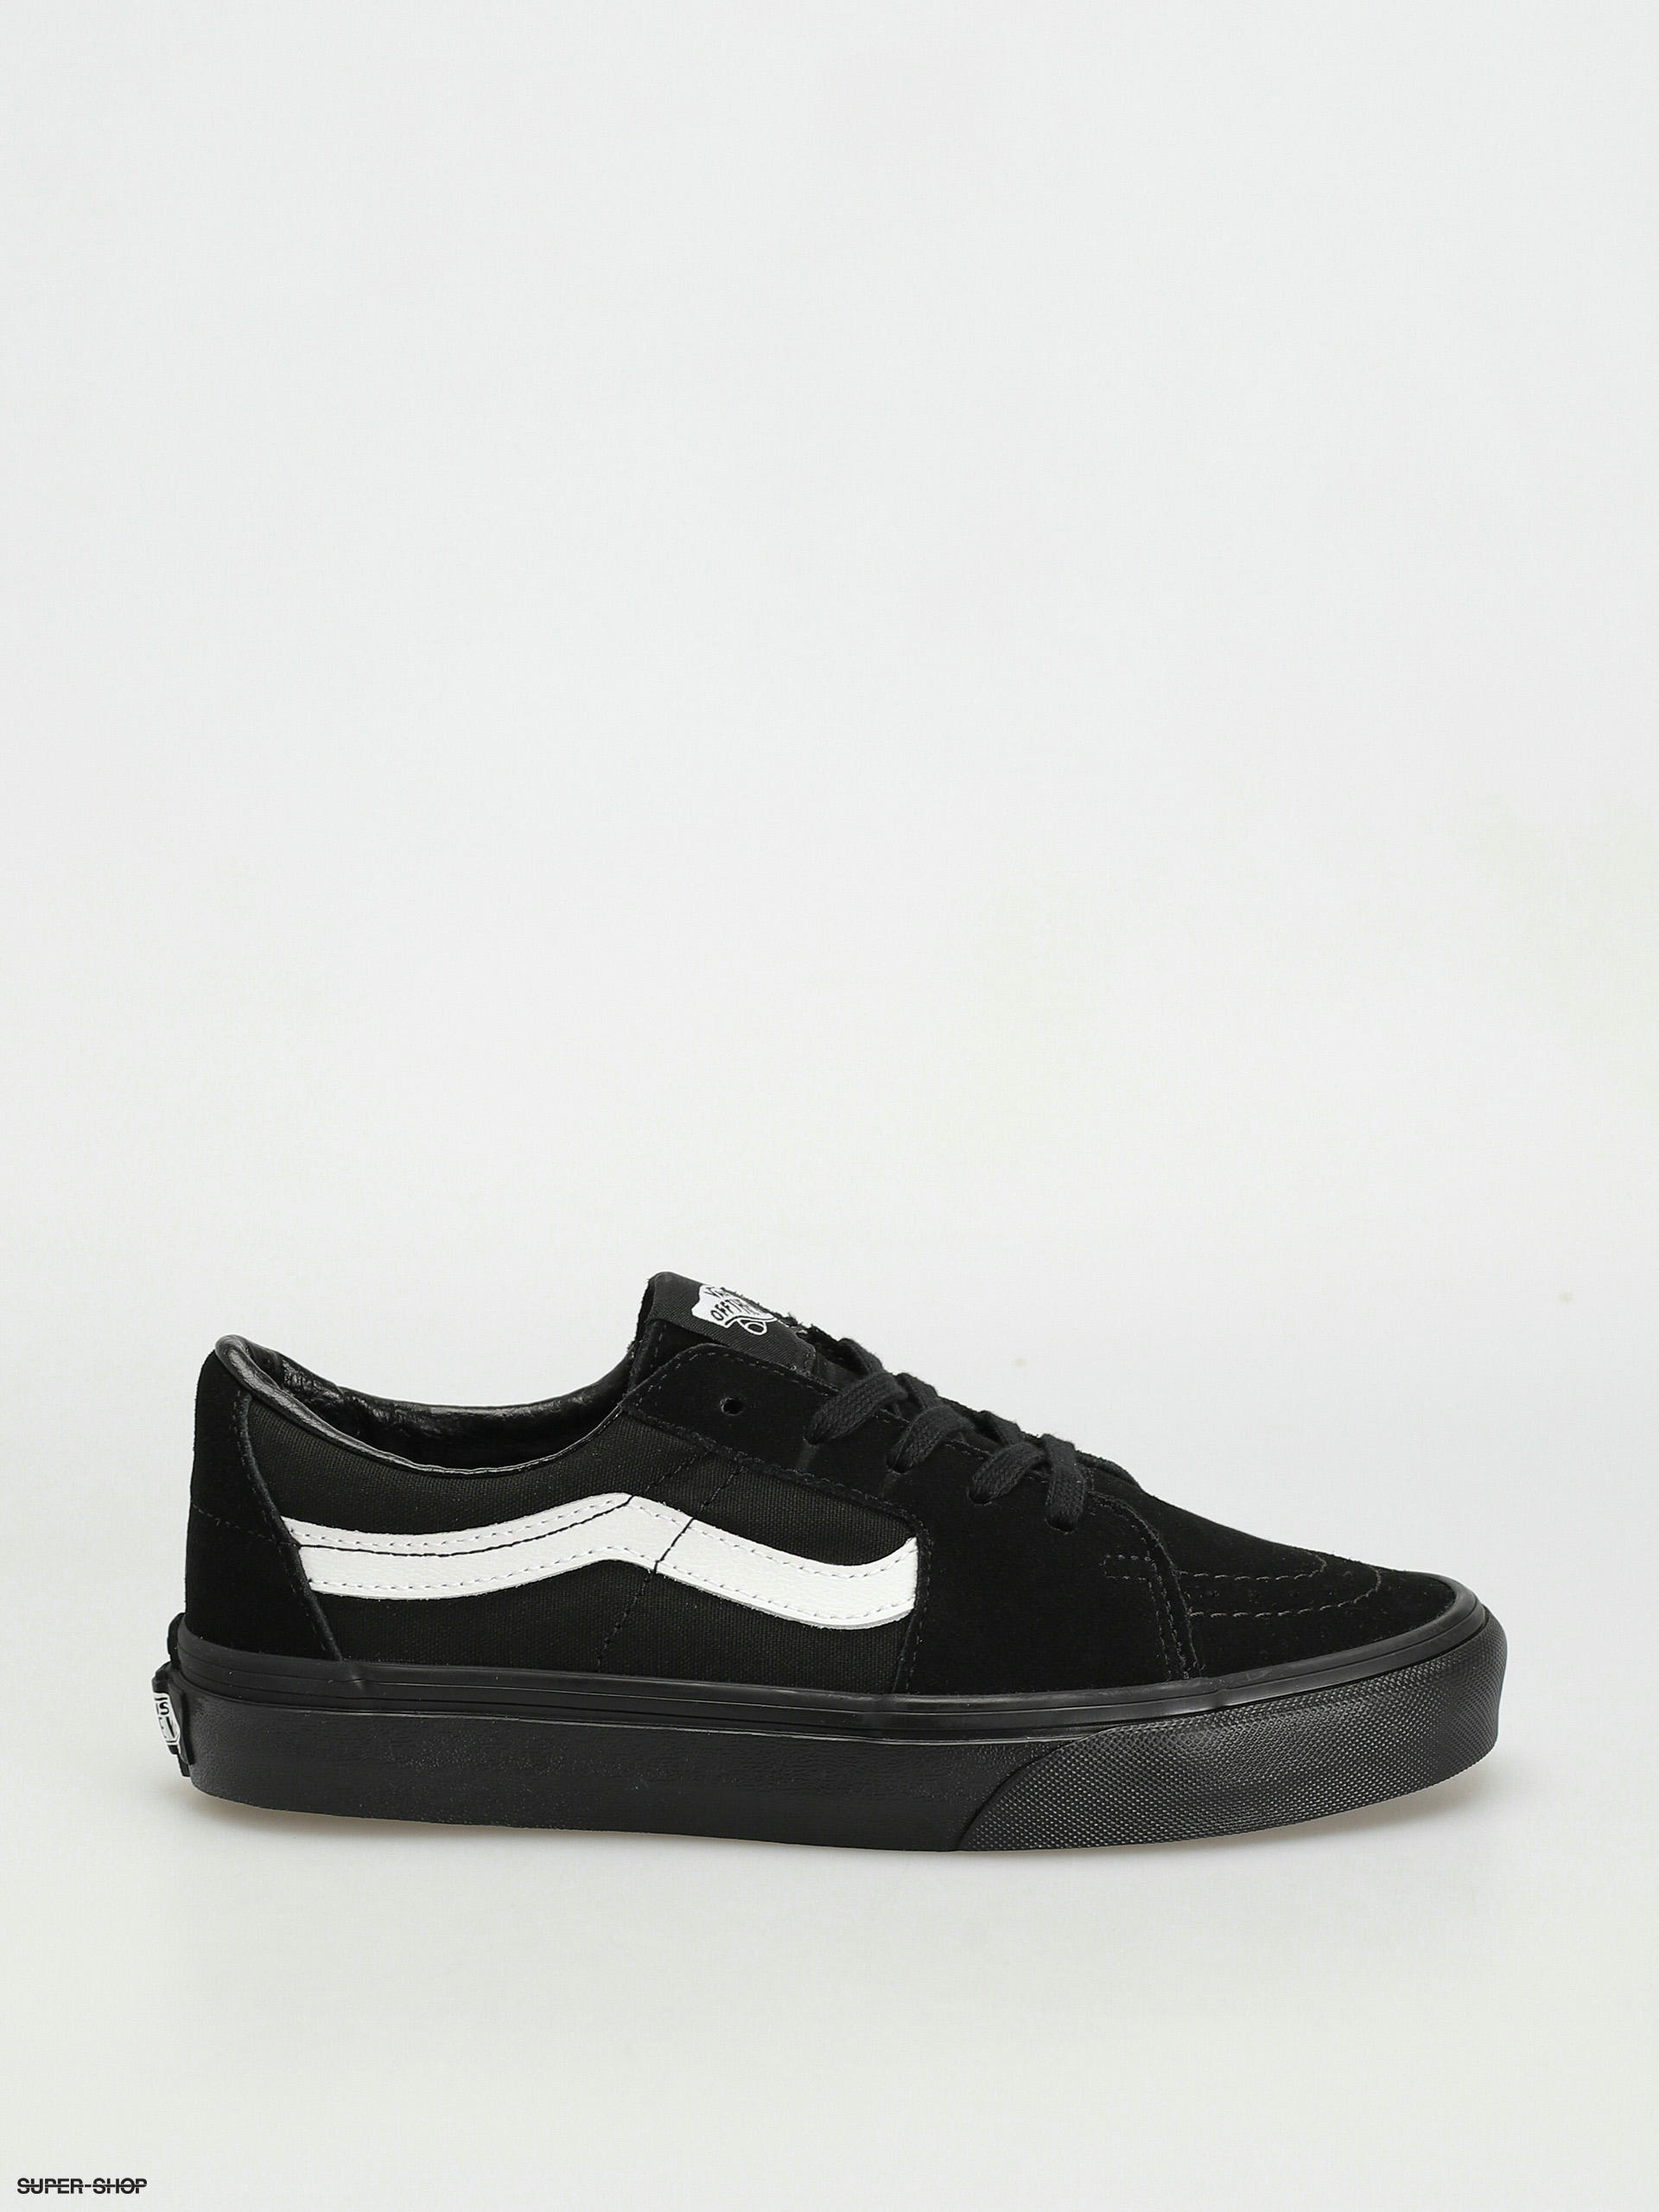 (contrast Low black/white) Vans Sk8 Schuhe